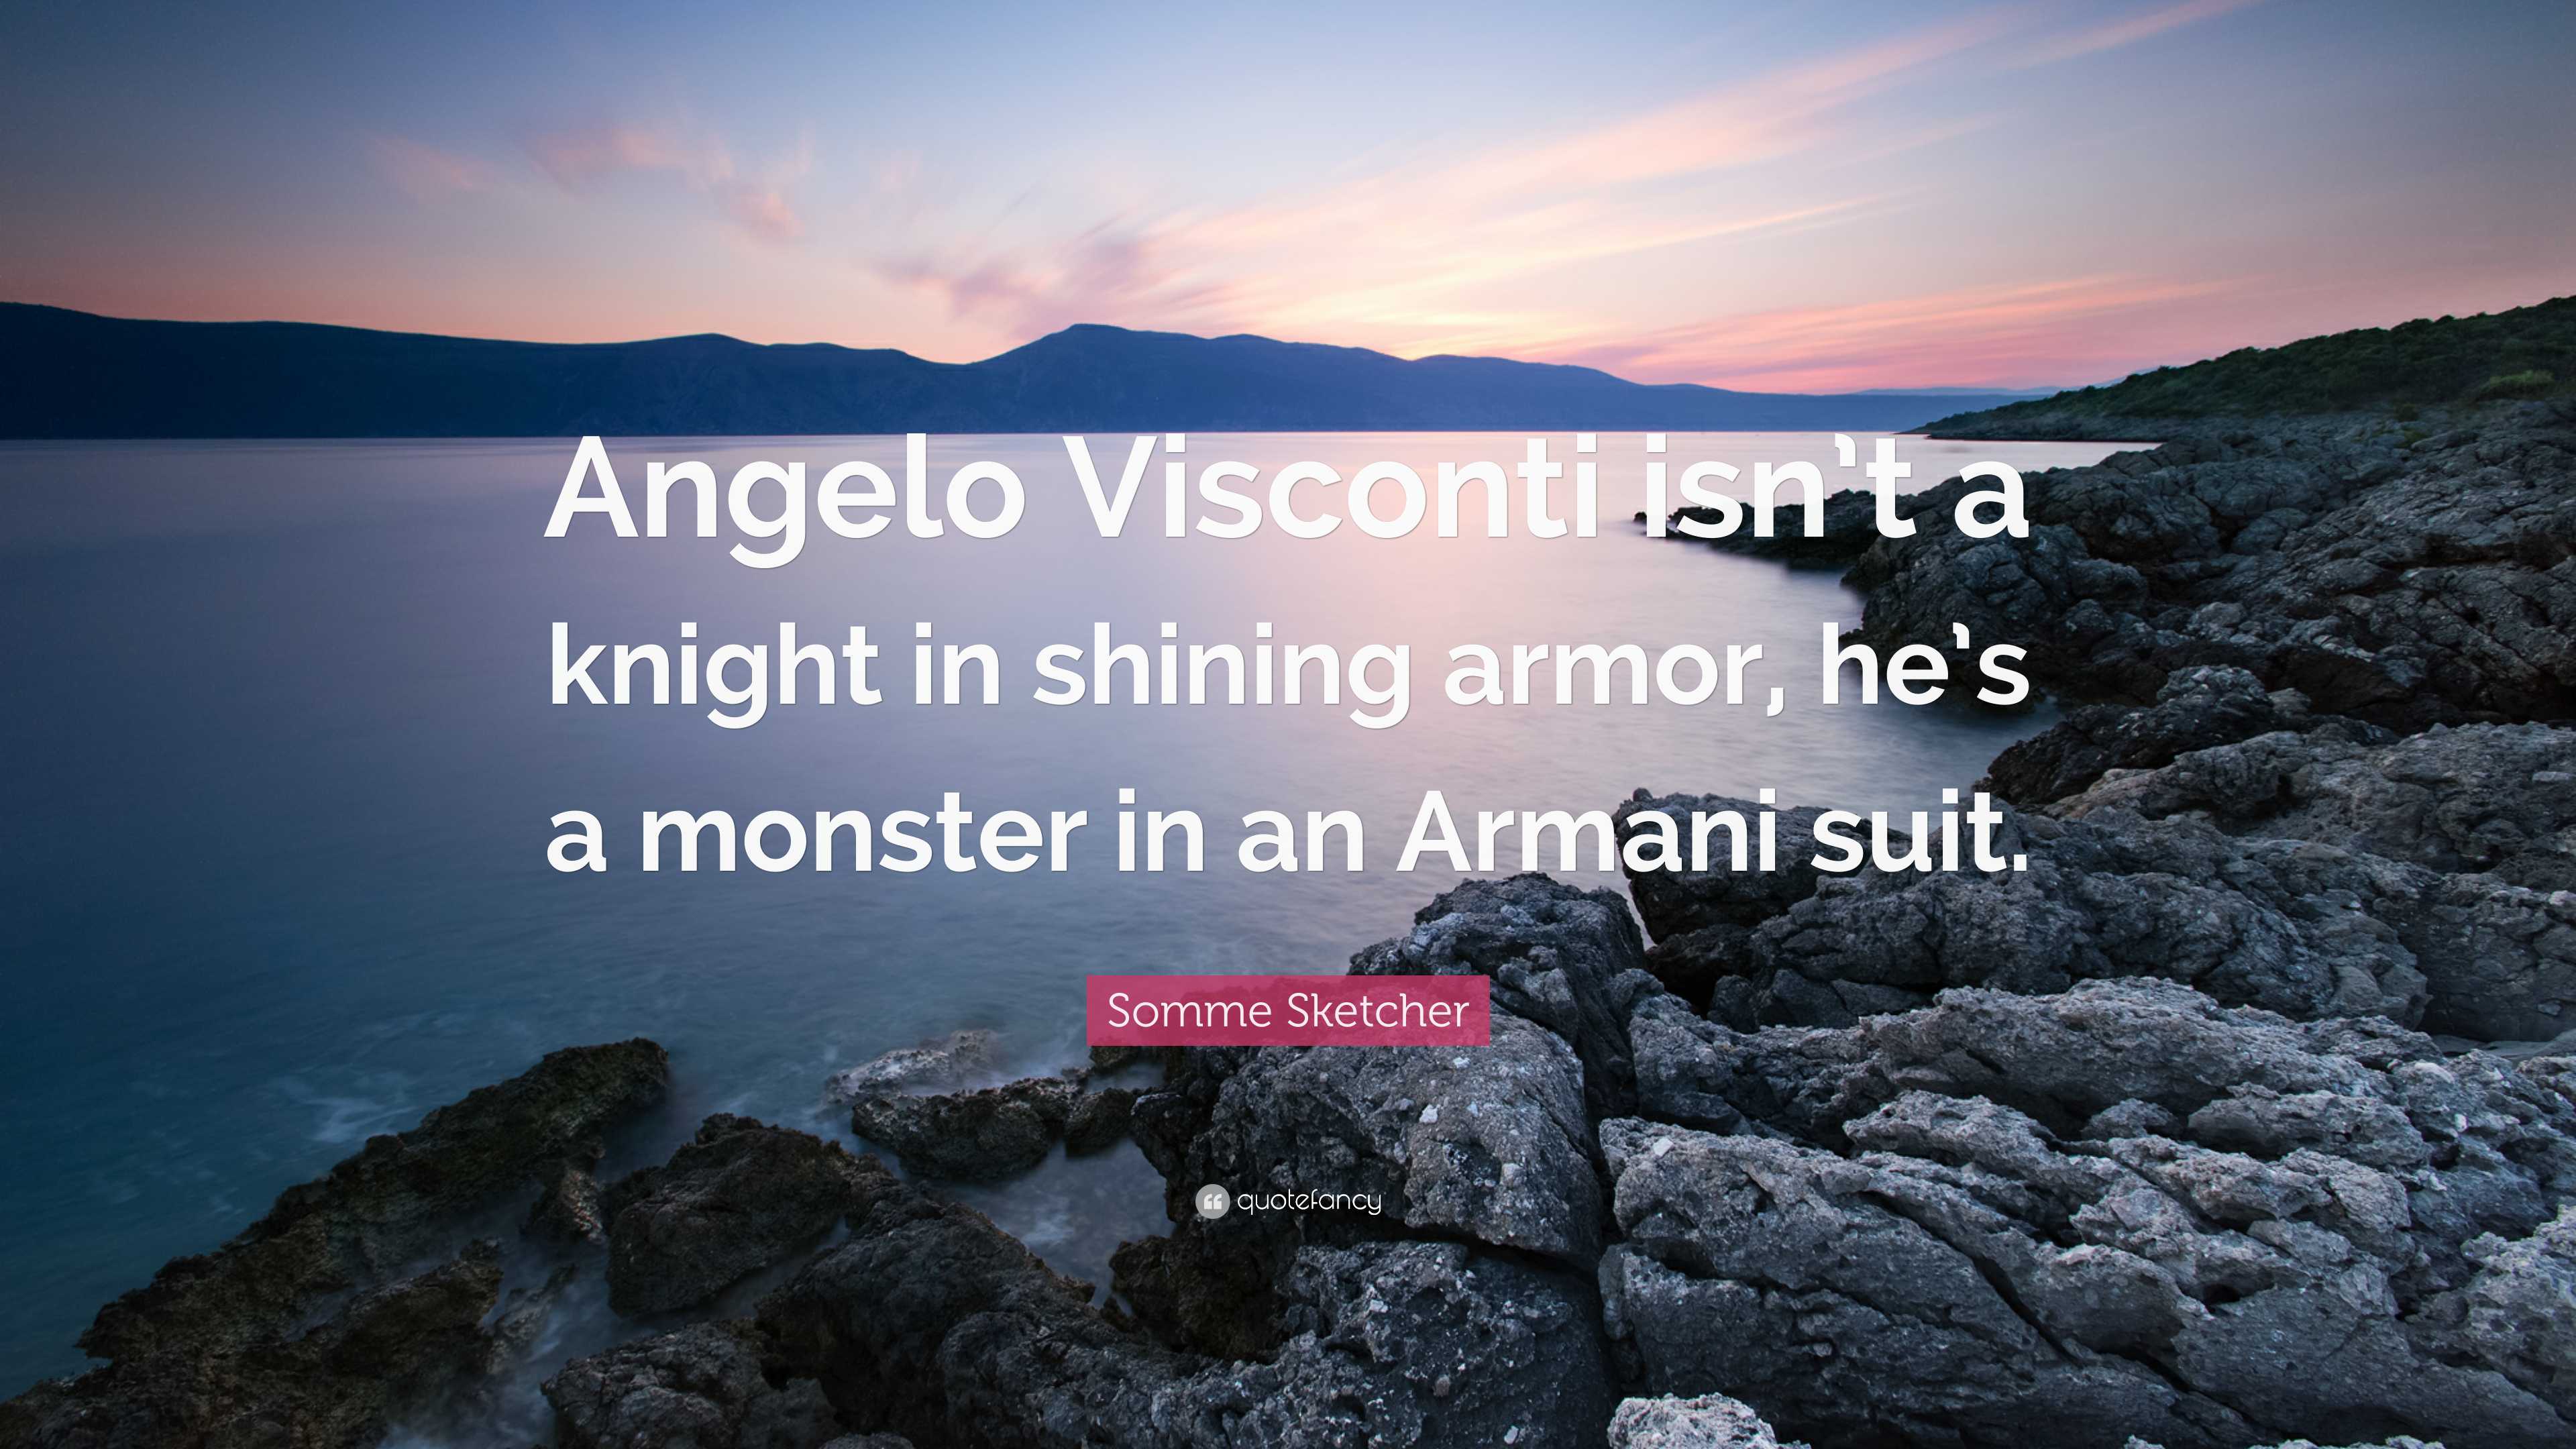 delan smith share knight in shining armani photos